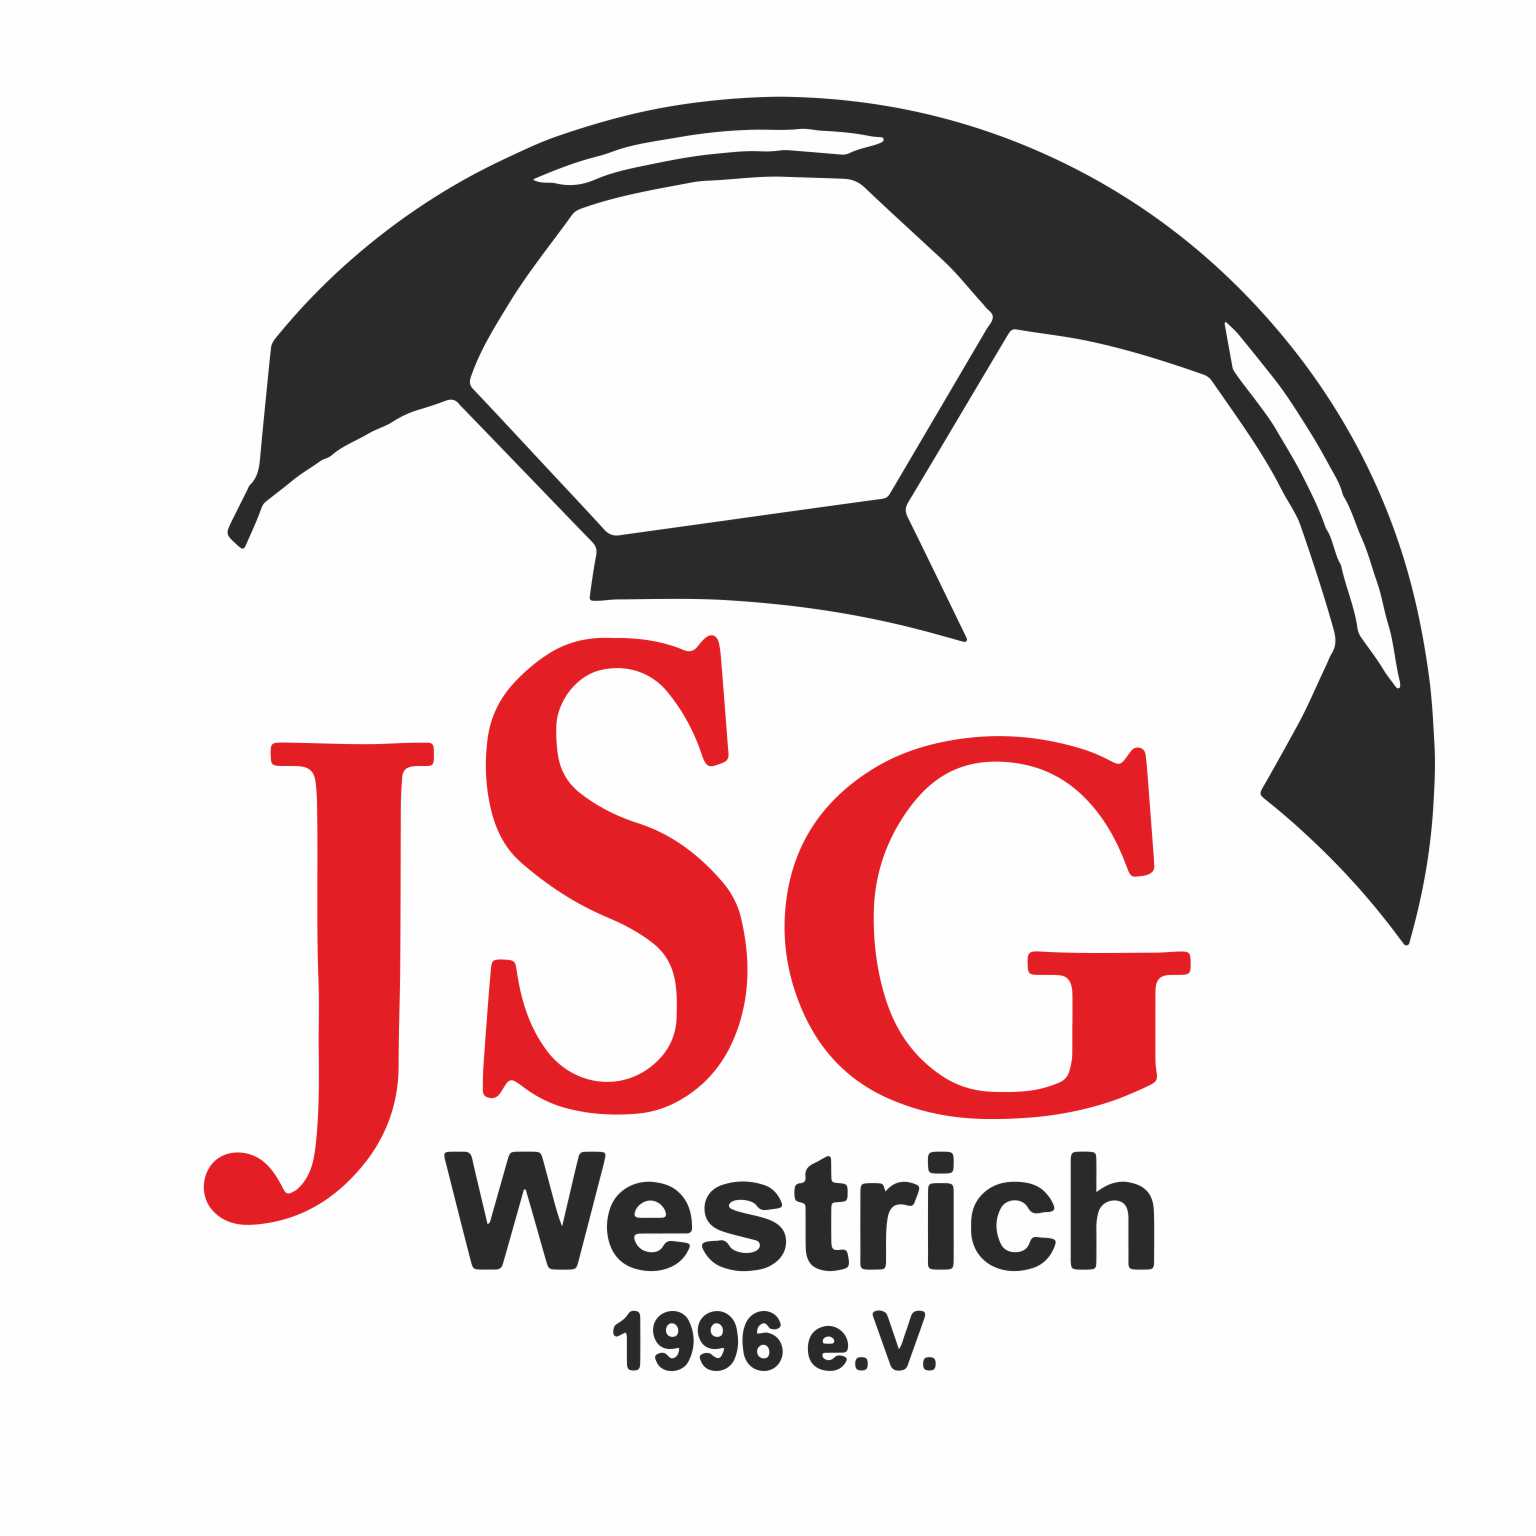 jsg-westrich-logo-sport-krauss